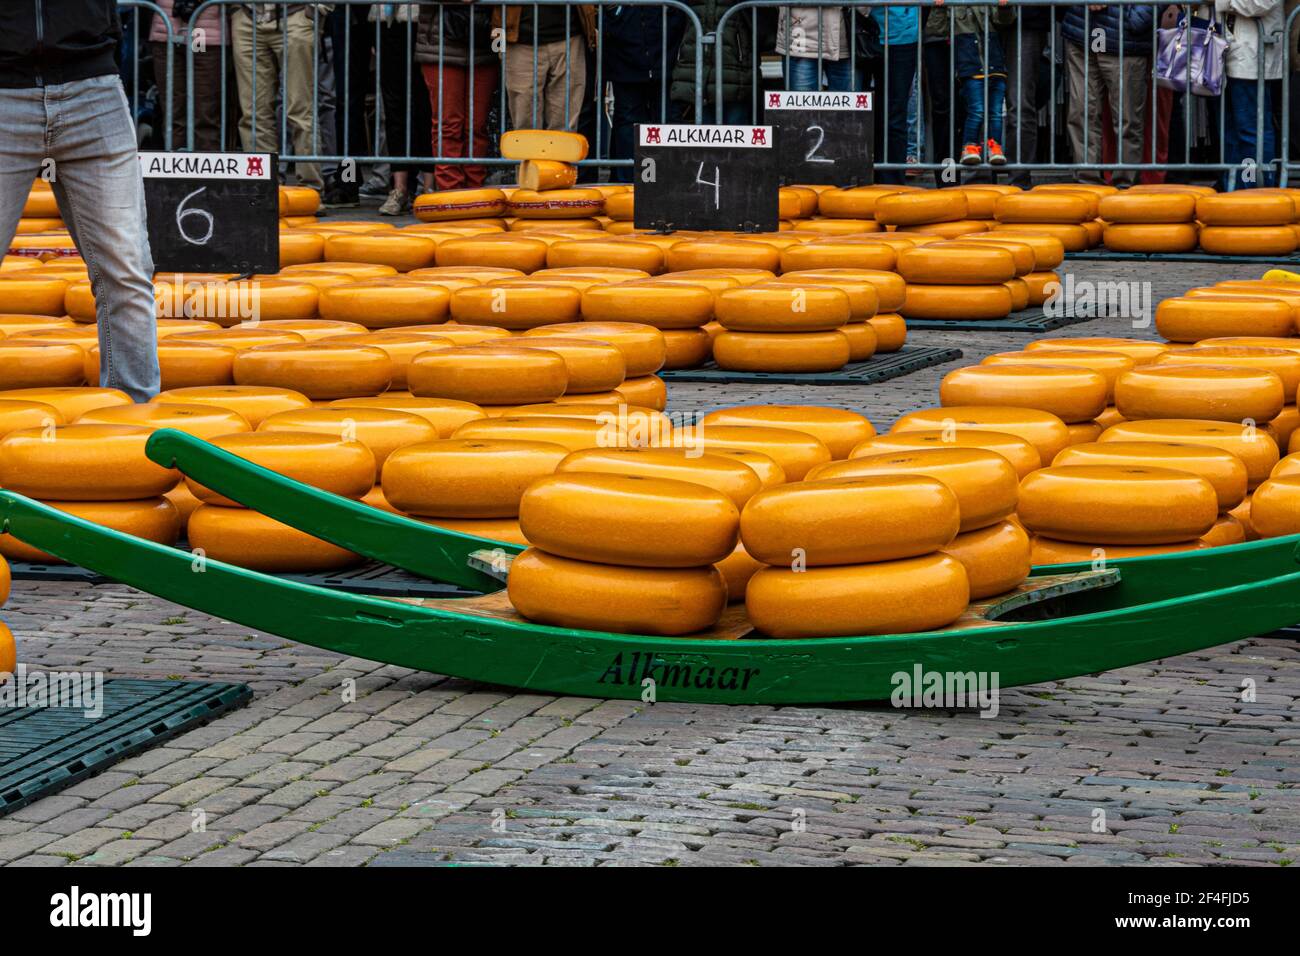 Alkmaar, Netherlands; May 18, 2018: Cheese Market transport Stock Photo